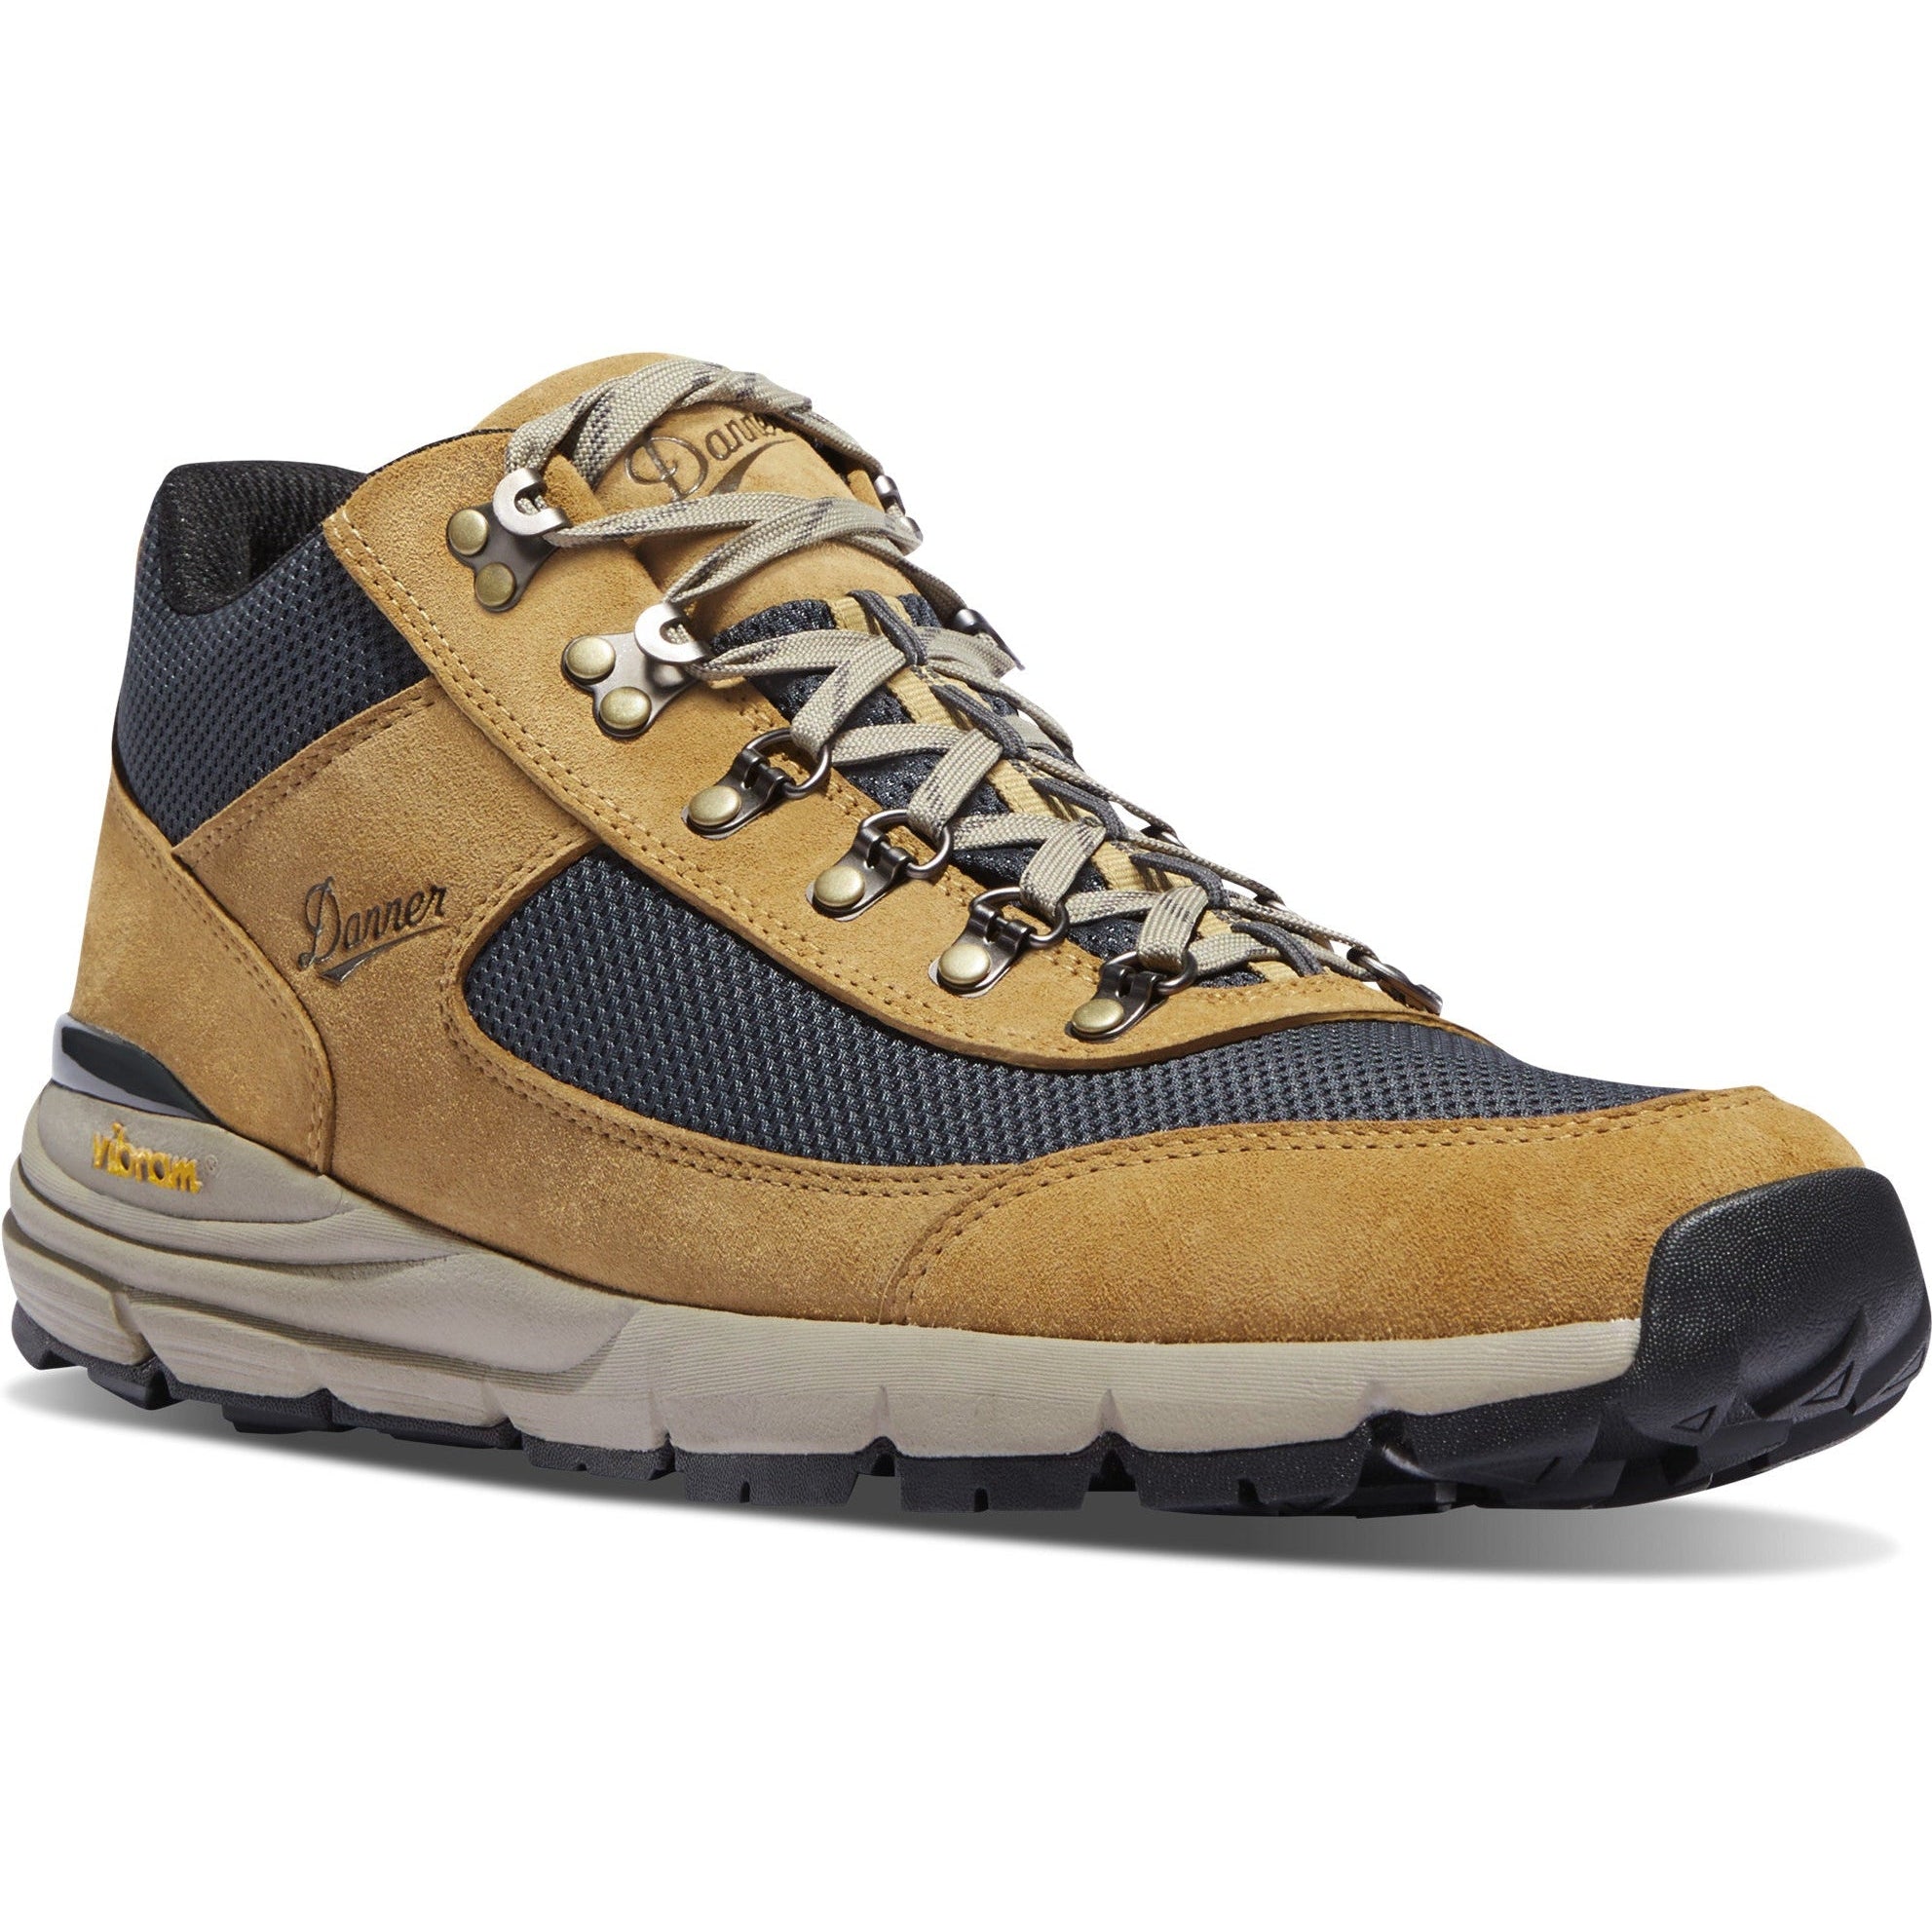 Danner Men's South Rim 600 4" Hiking Boot - Sand - 64310 8 / Medium / Sand - Overlook Boots